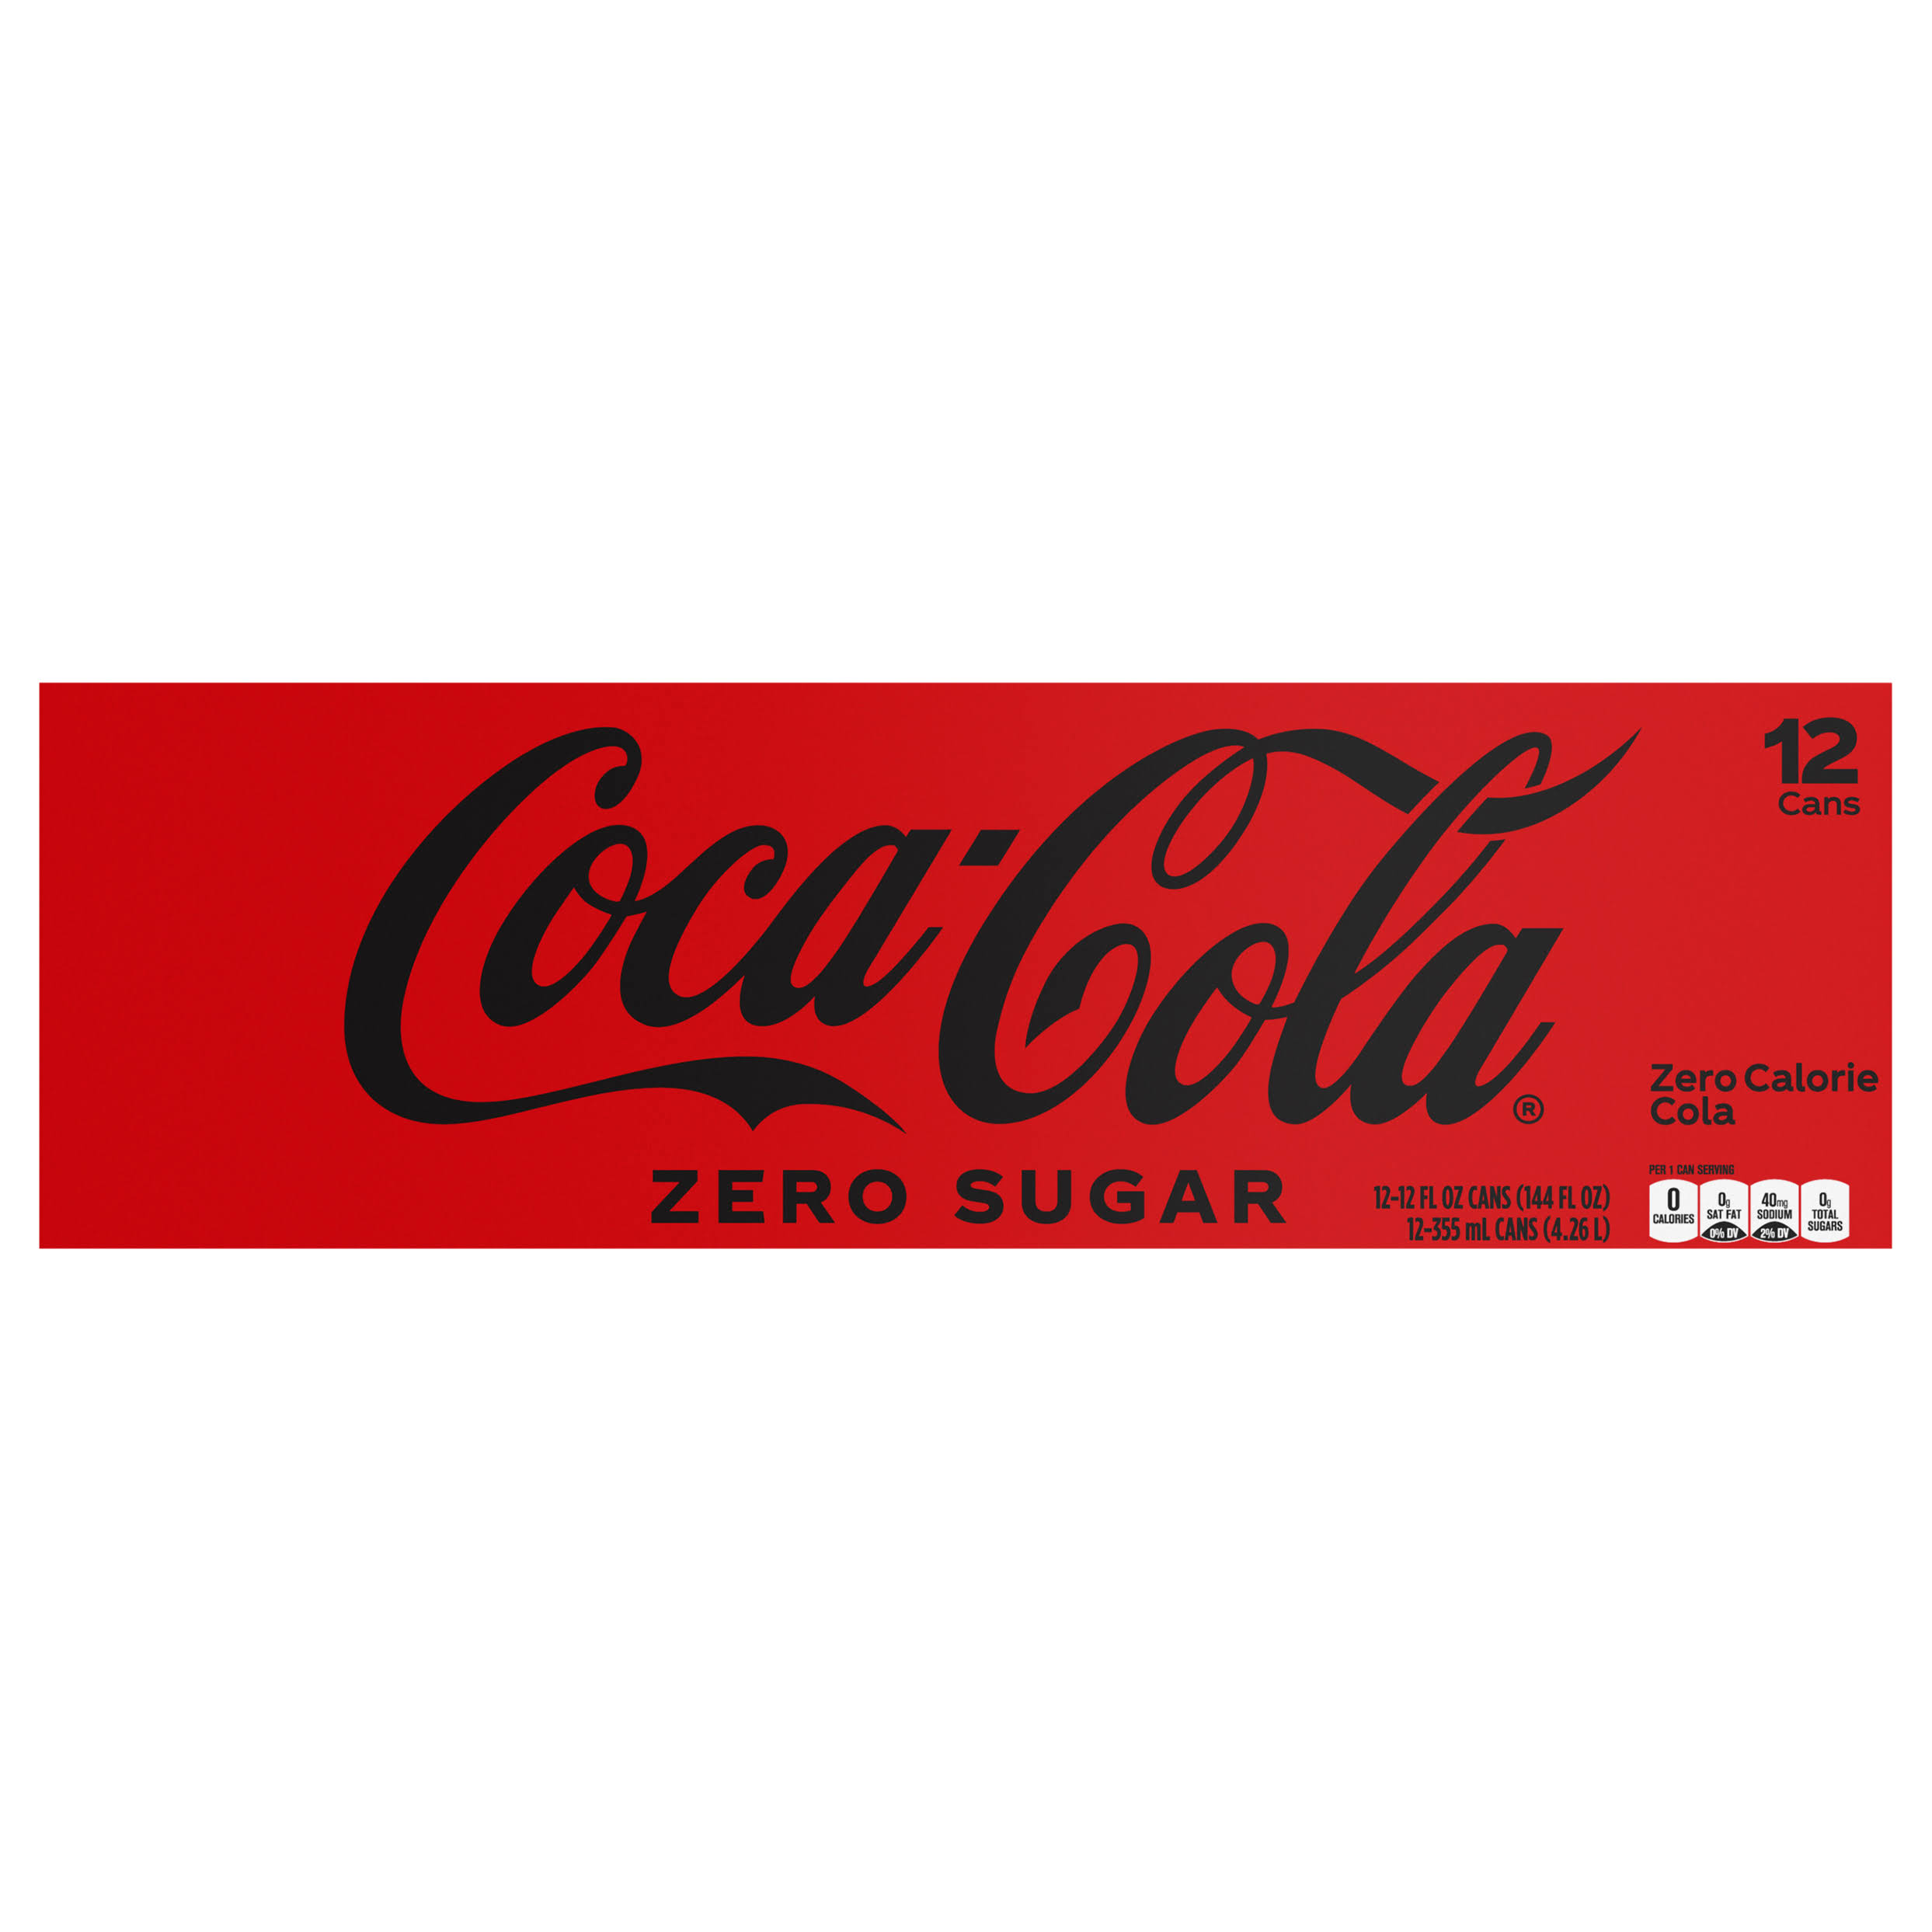 Coca-Cola Zero Cola - 12oz, 12pk